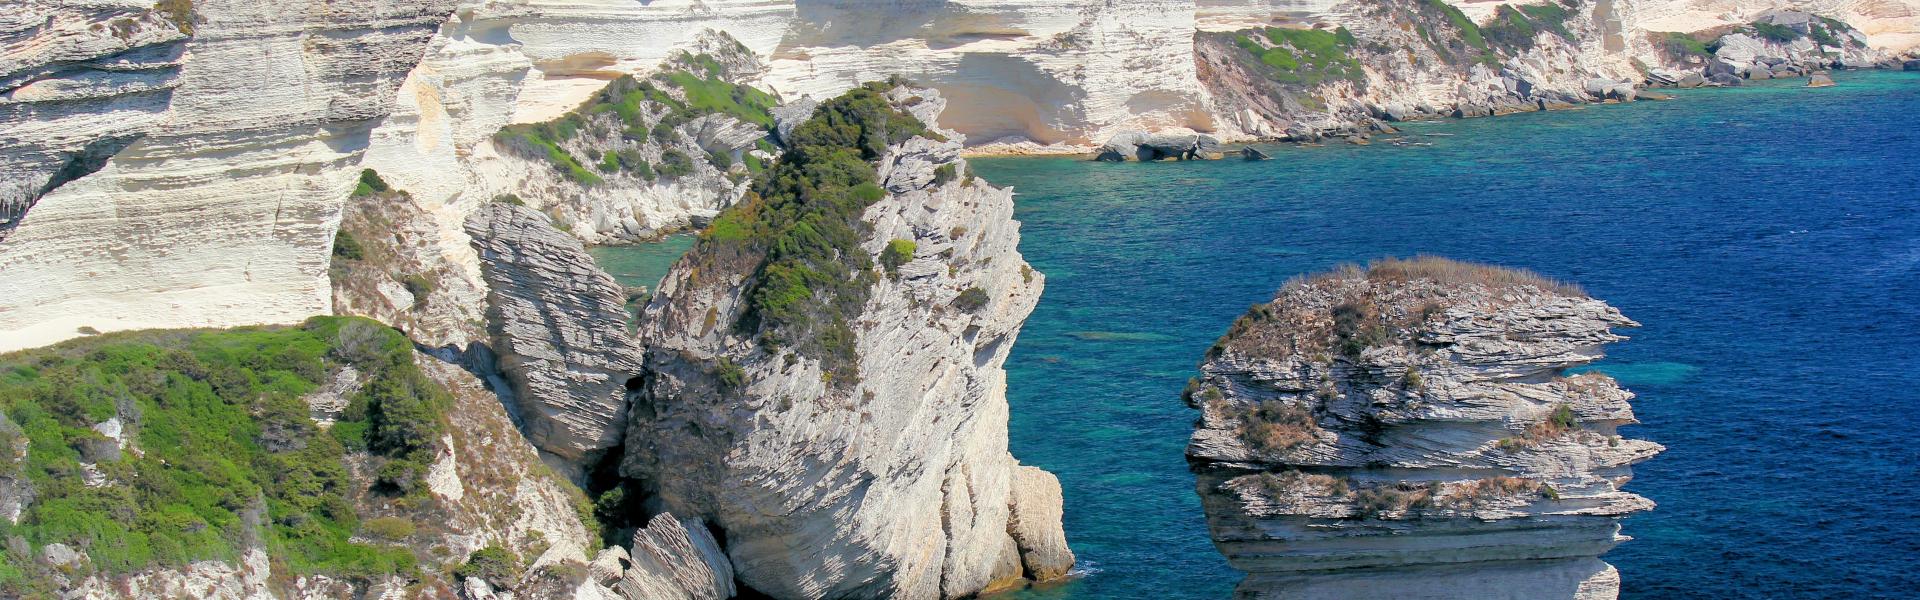 Location de vacances à Urtaca - Haute-Corse - amivac